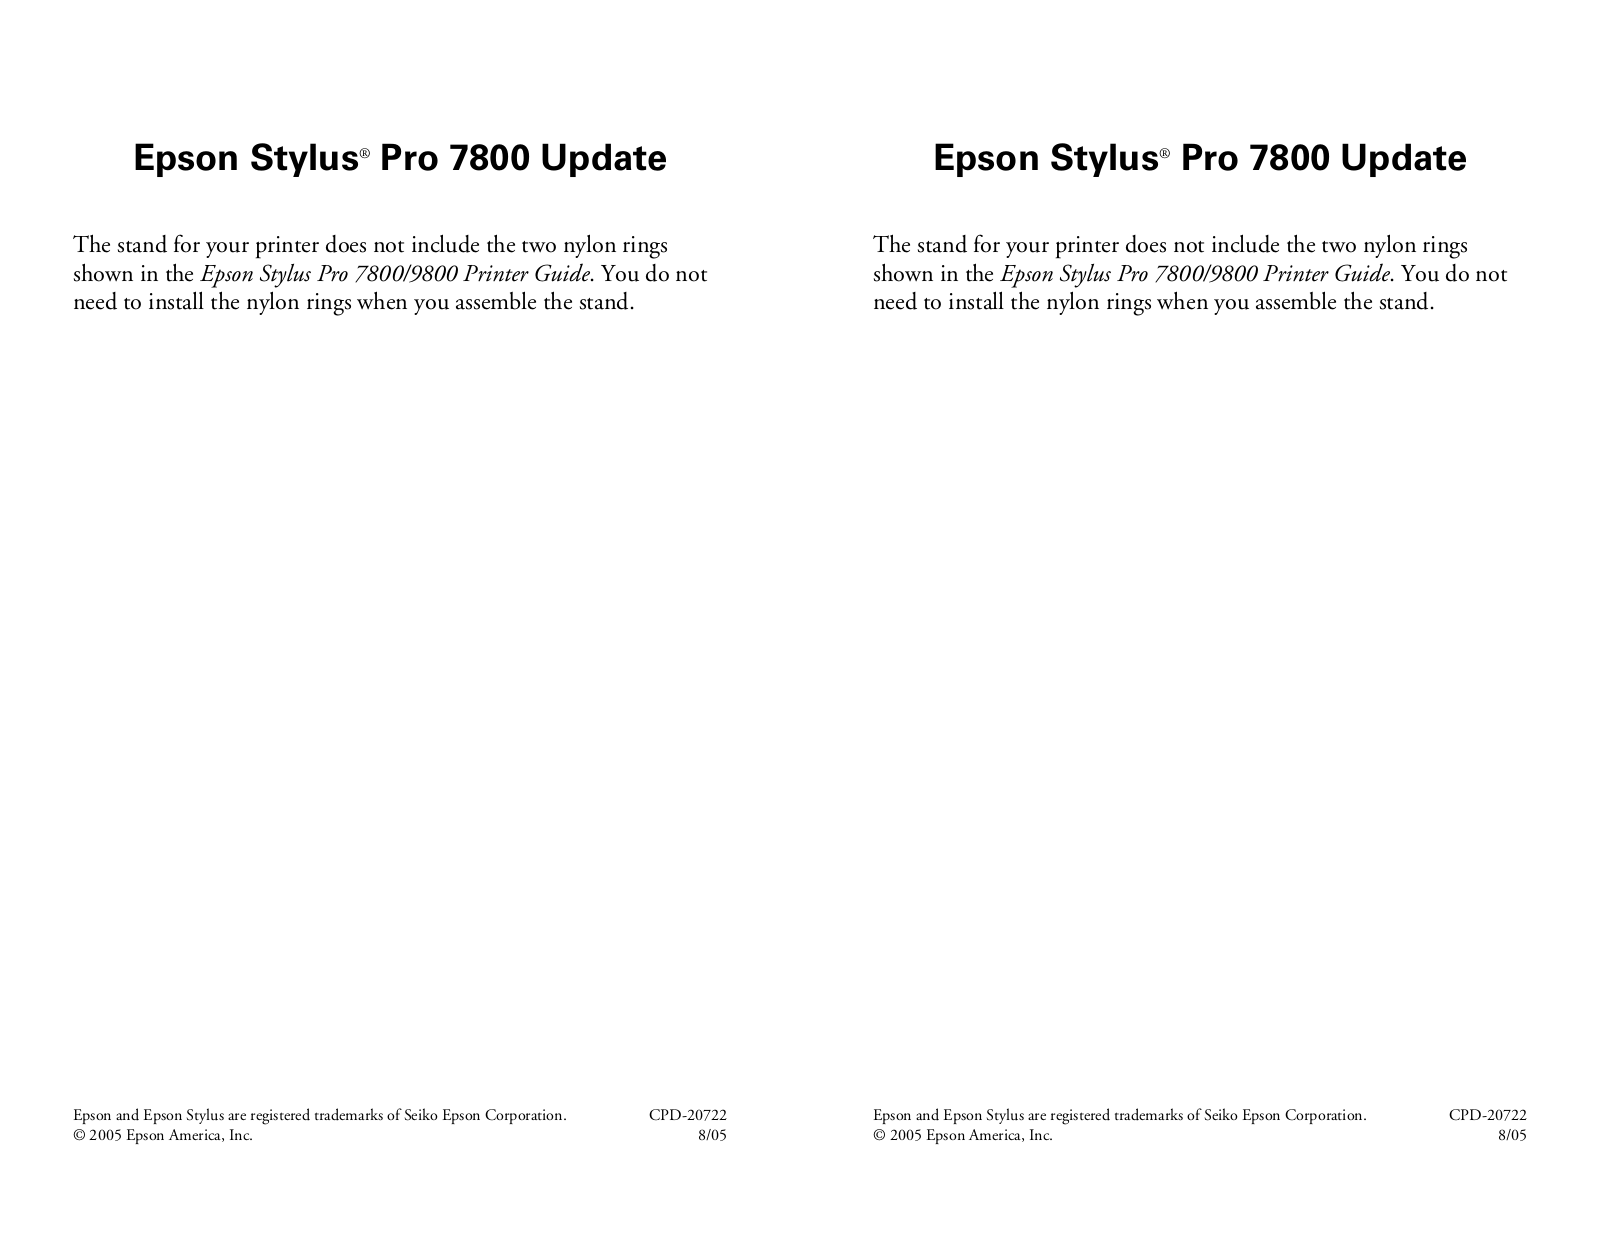 Epson Pro 7800, Pro 9800 User Manual